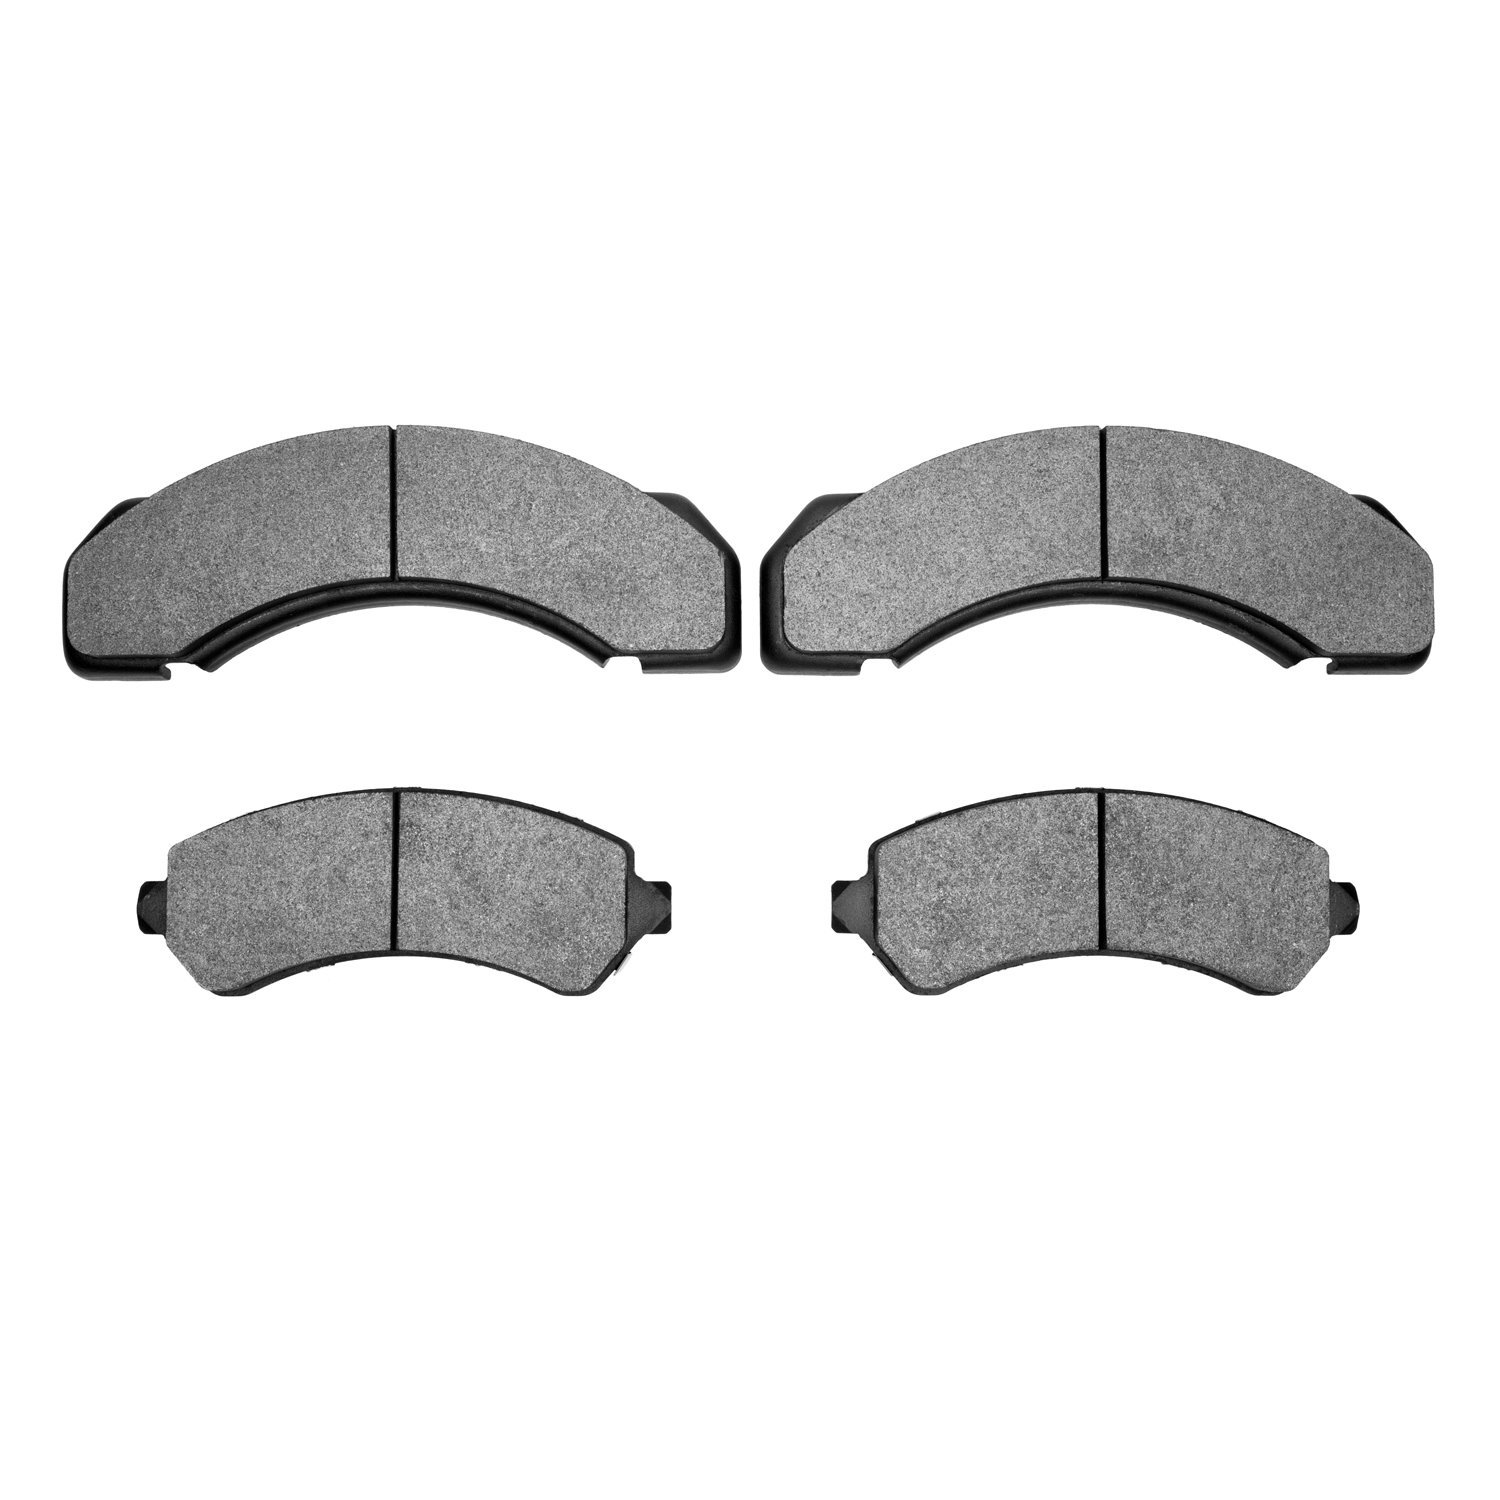 1214-0717-00 Heavy-Duty Semi-Metallic Brake Pads, 1973-2012 Multiple Makes/Models, Position: Front,Fr & Rr,Fr,Rear,Rr